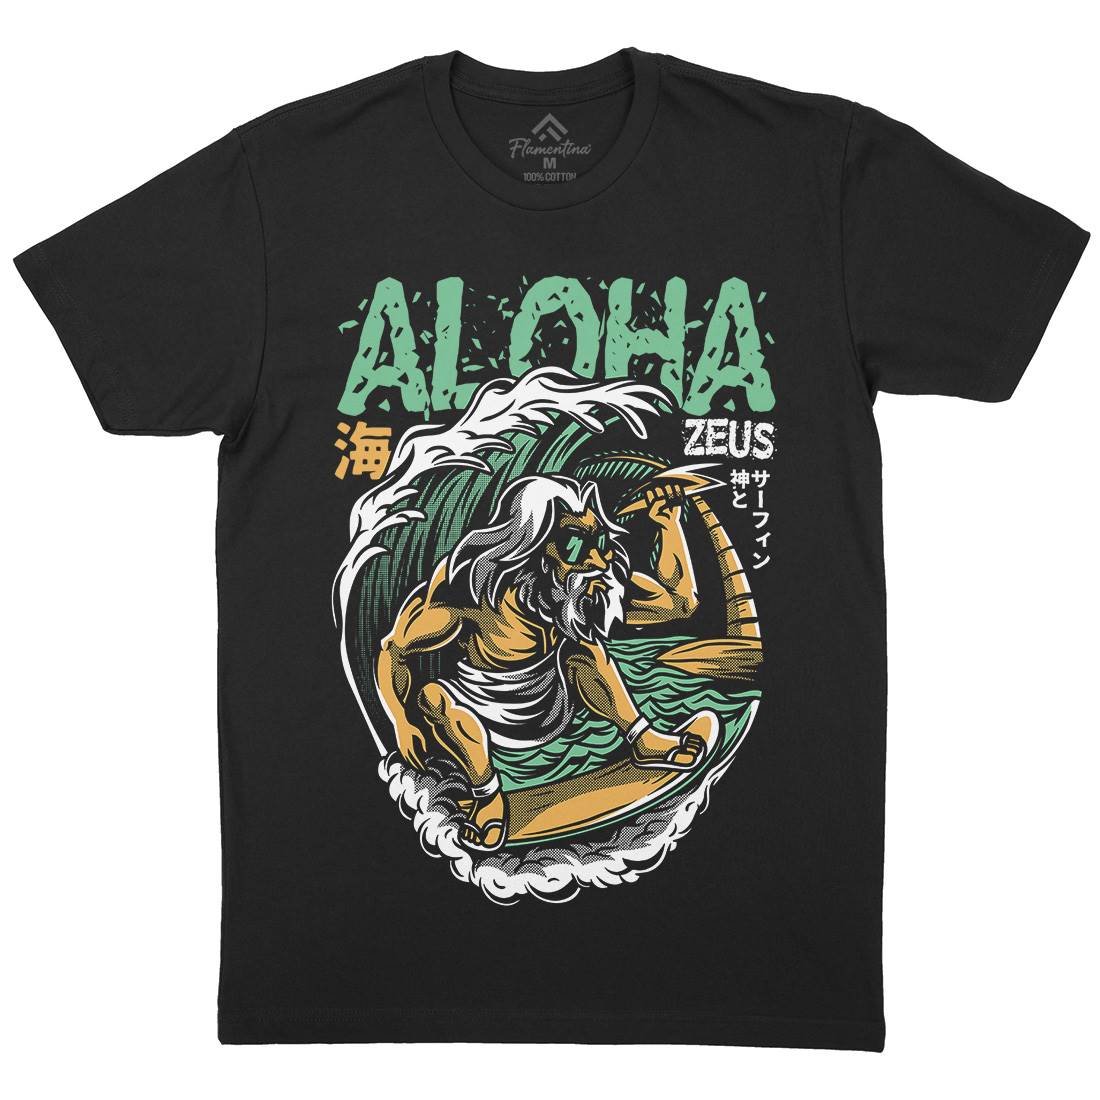 Aloha Zeus Mens Crew Neck T-Shirt Surf D703